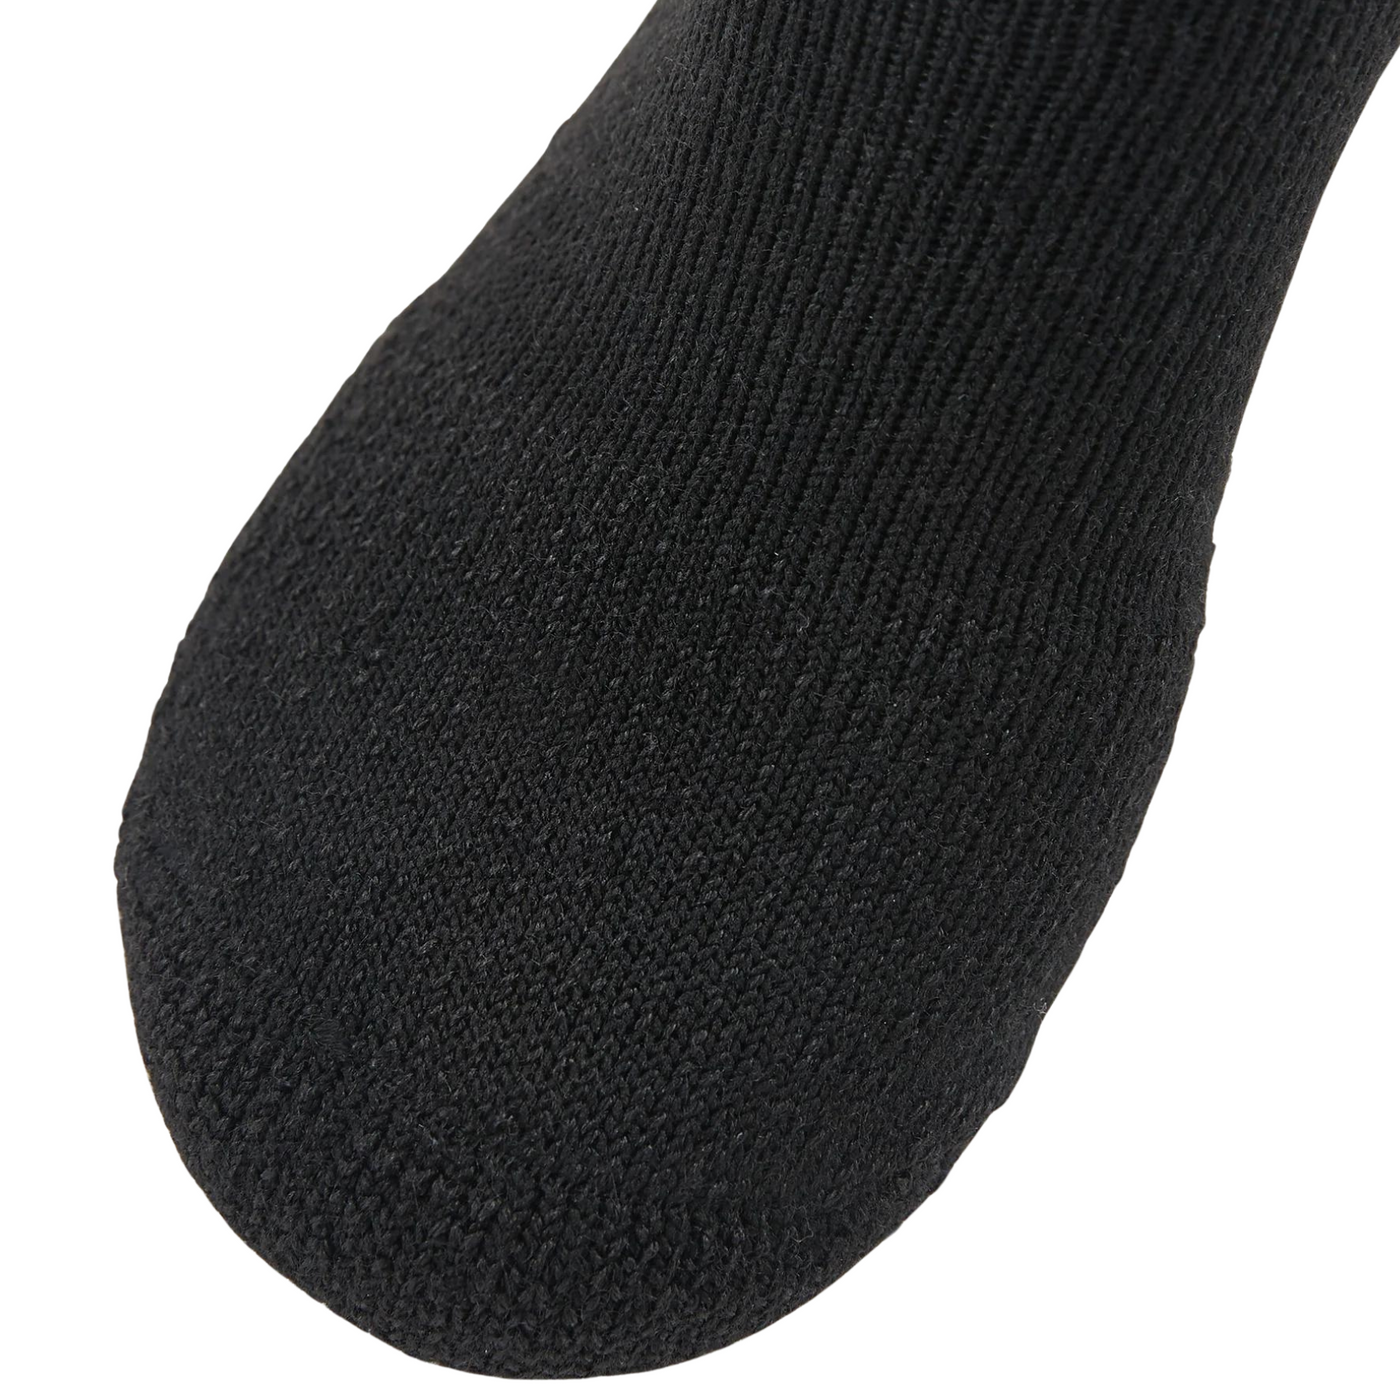 Thorlo Maximum Cushion Crew Tennis Socks - Black